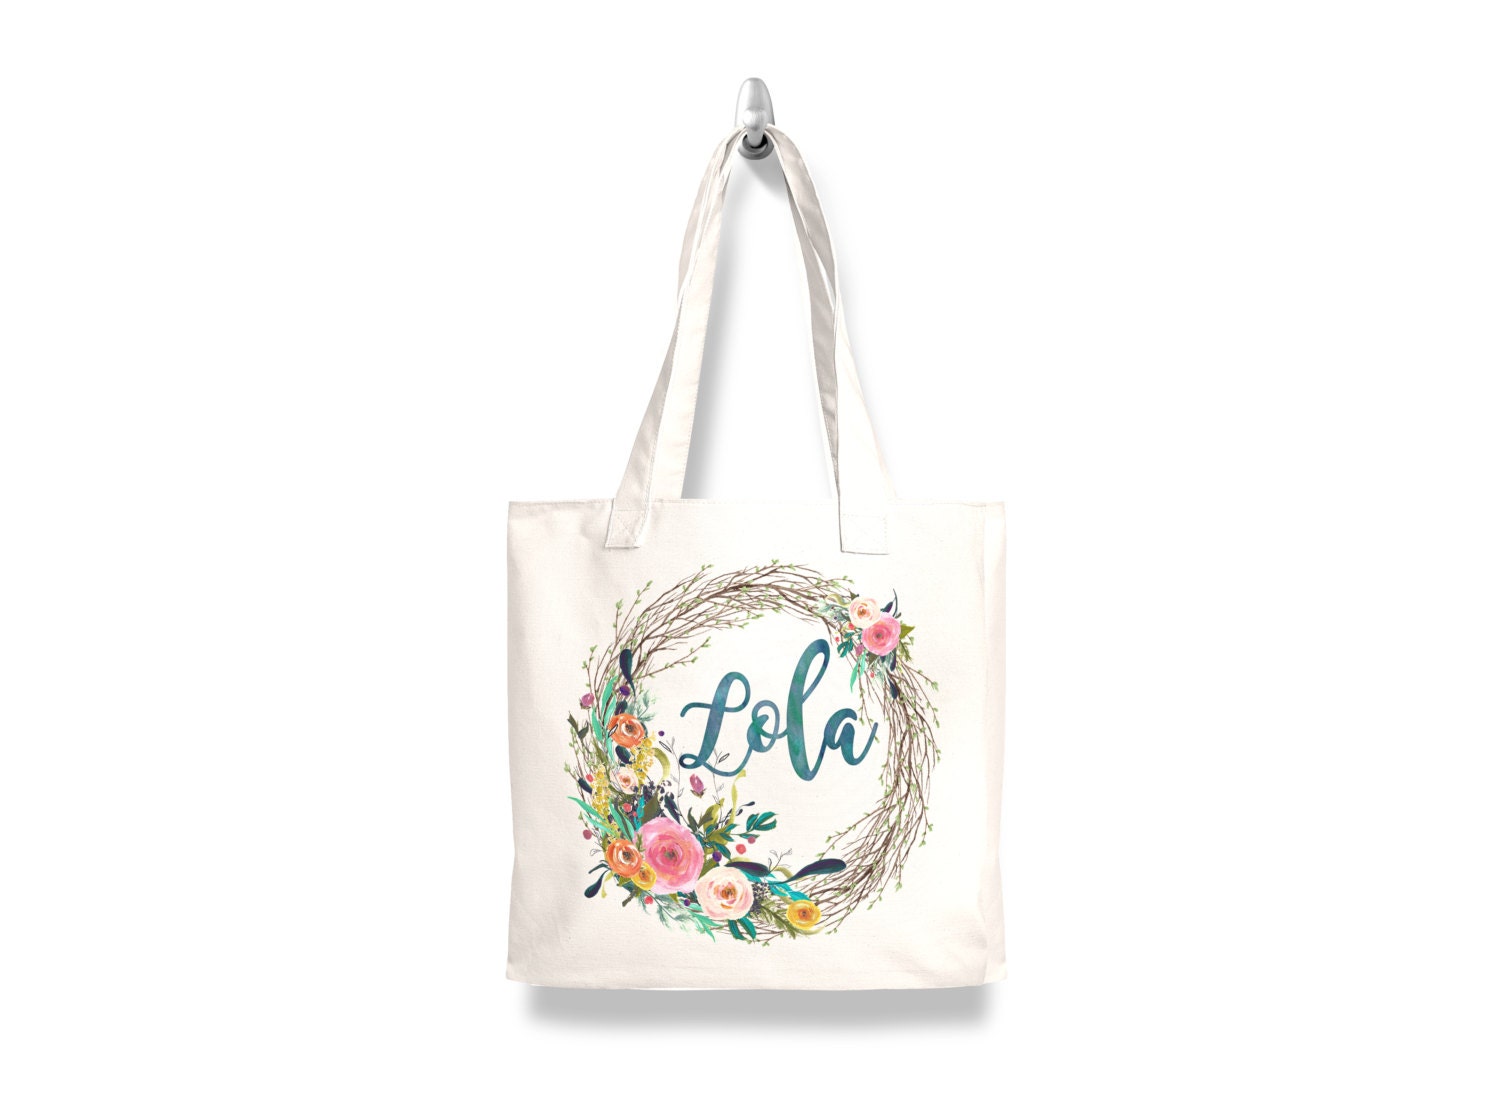 Floral name tote, personalized canvas bag, elegant rustic wedding, floral monogram, bridesmaid gift, summer wedding, 100% Cotton Canvas